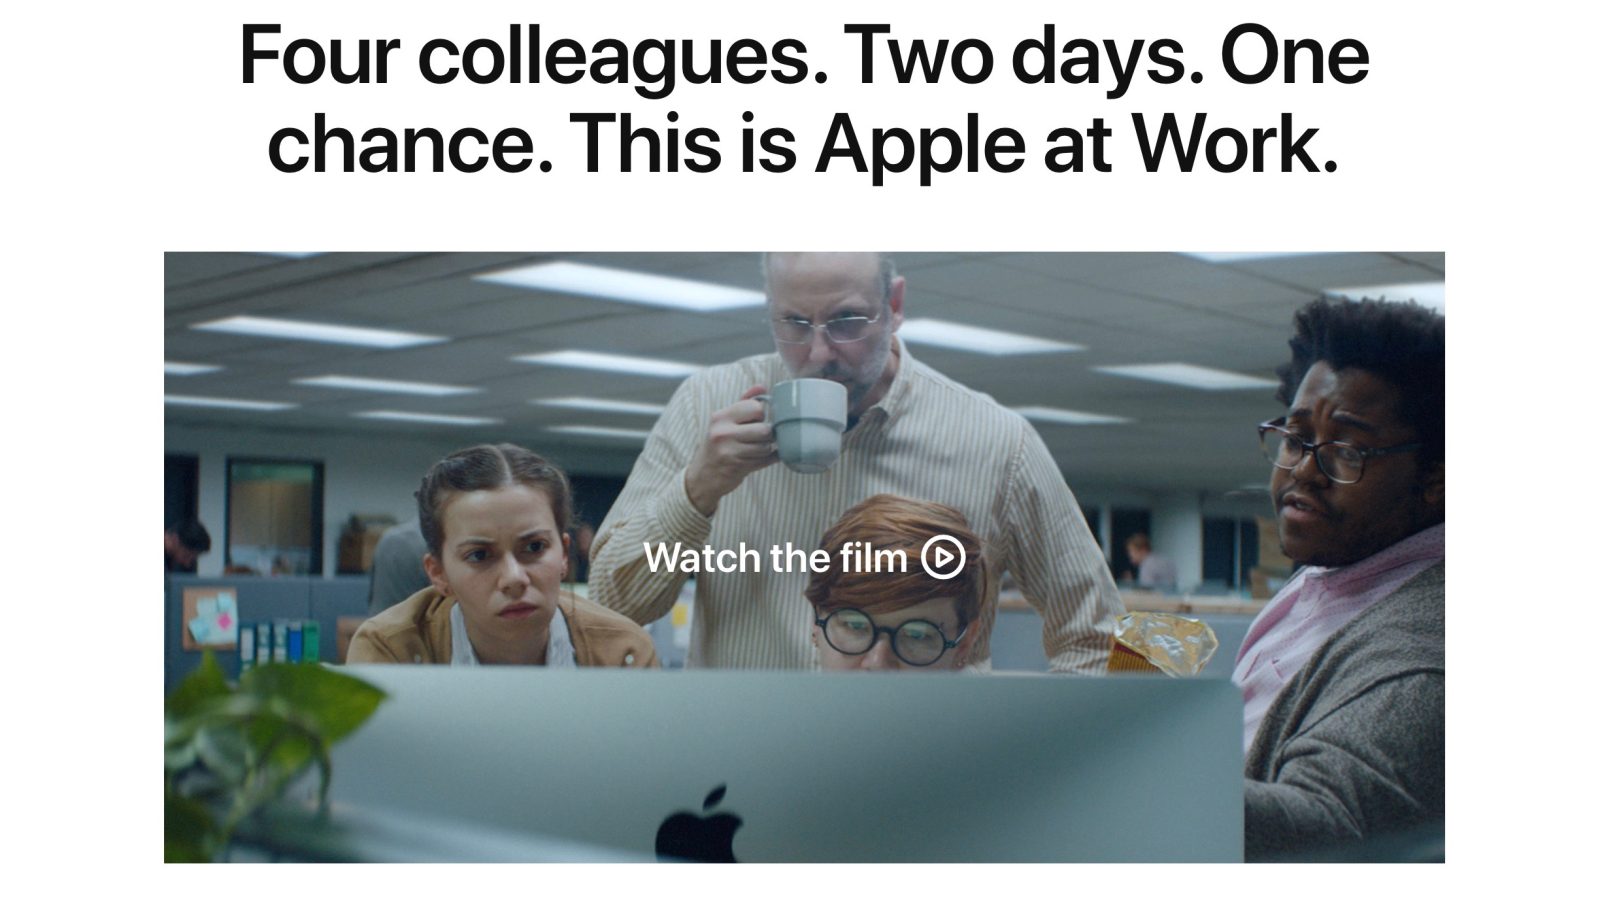 Apple at work